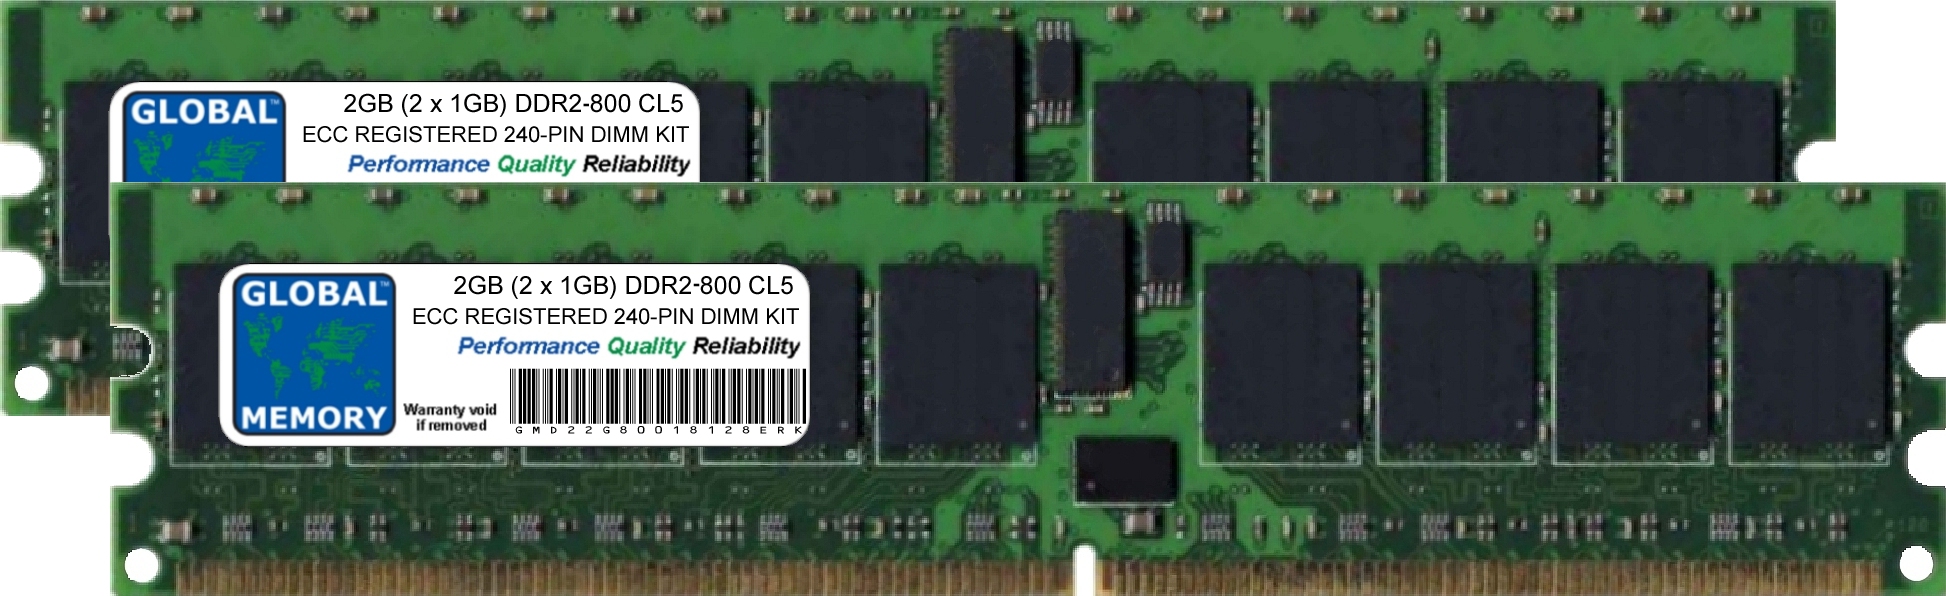 2GB (2 x 1GB) DDR2 800MHz PC2-6400 240-PIN ECC REGISTERED DIMM (RDIMM) MEMORY RAM KIT FOR DELL SERVERS/WORKSTATIONS (2 RANK KIT CHIPKILL)